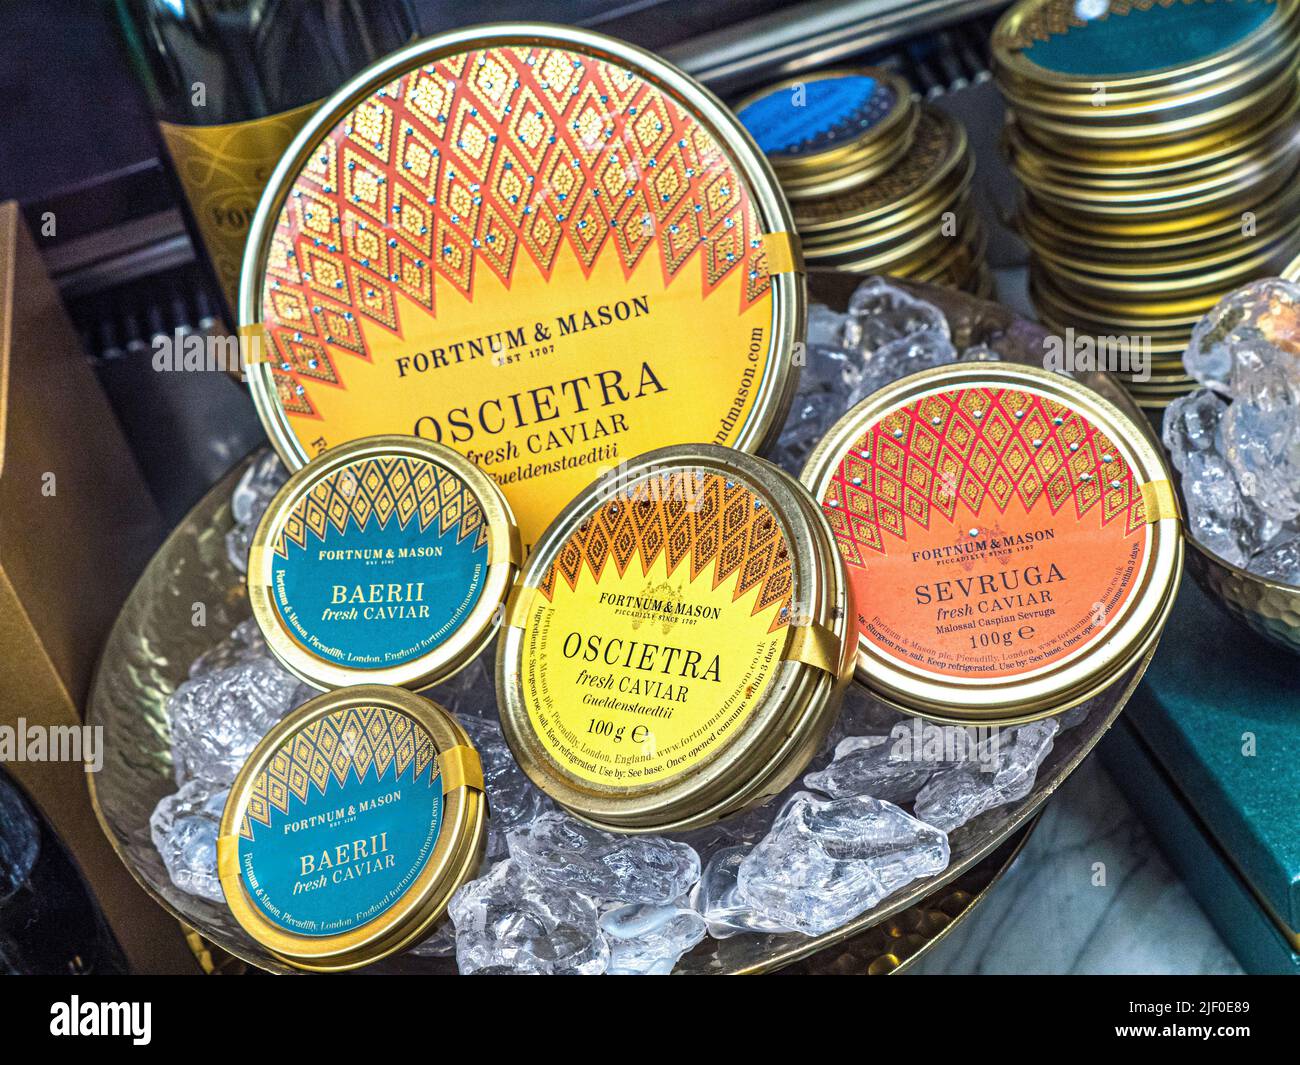 CAVIALE VARIETÀ RUSSE IN VENDITA MOSTRA Fortnum & Mason Food Hall con cabinet display di Fortnums marca Caviar varietà Beluga Oscietra Sevruga. Foto Stock